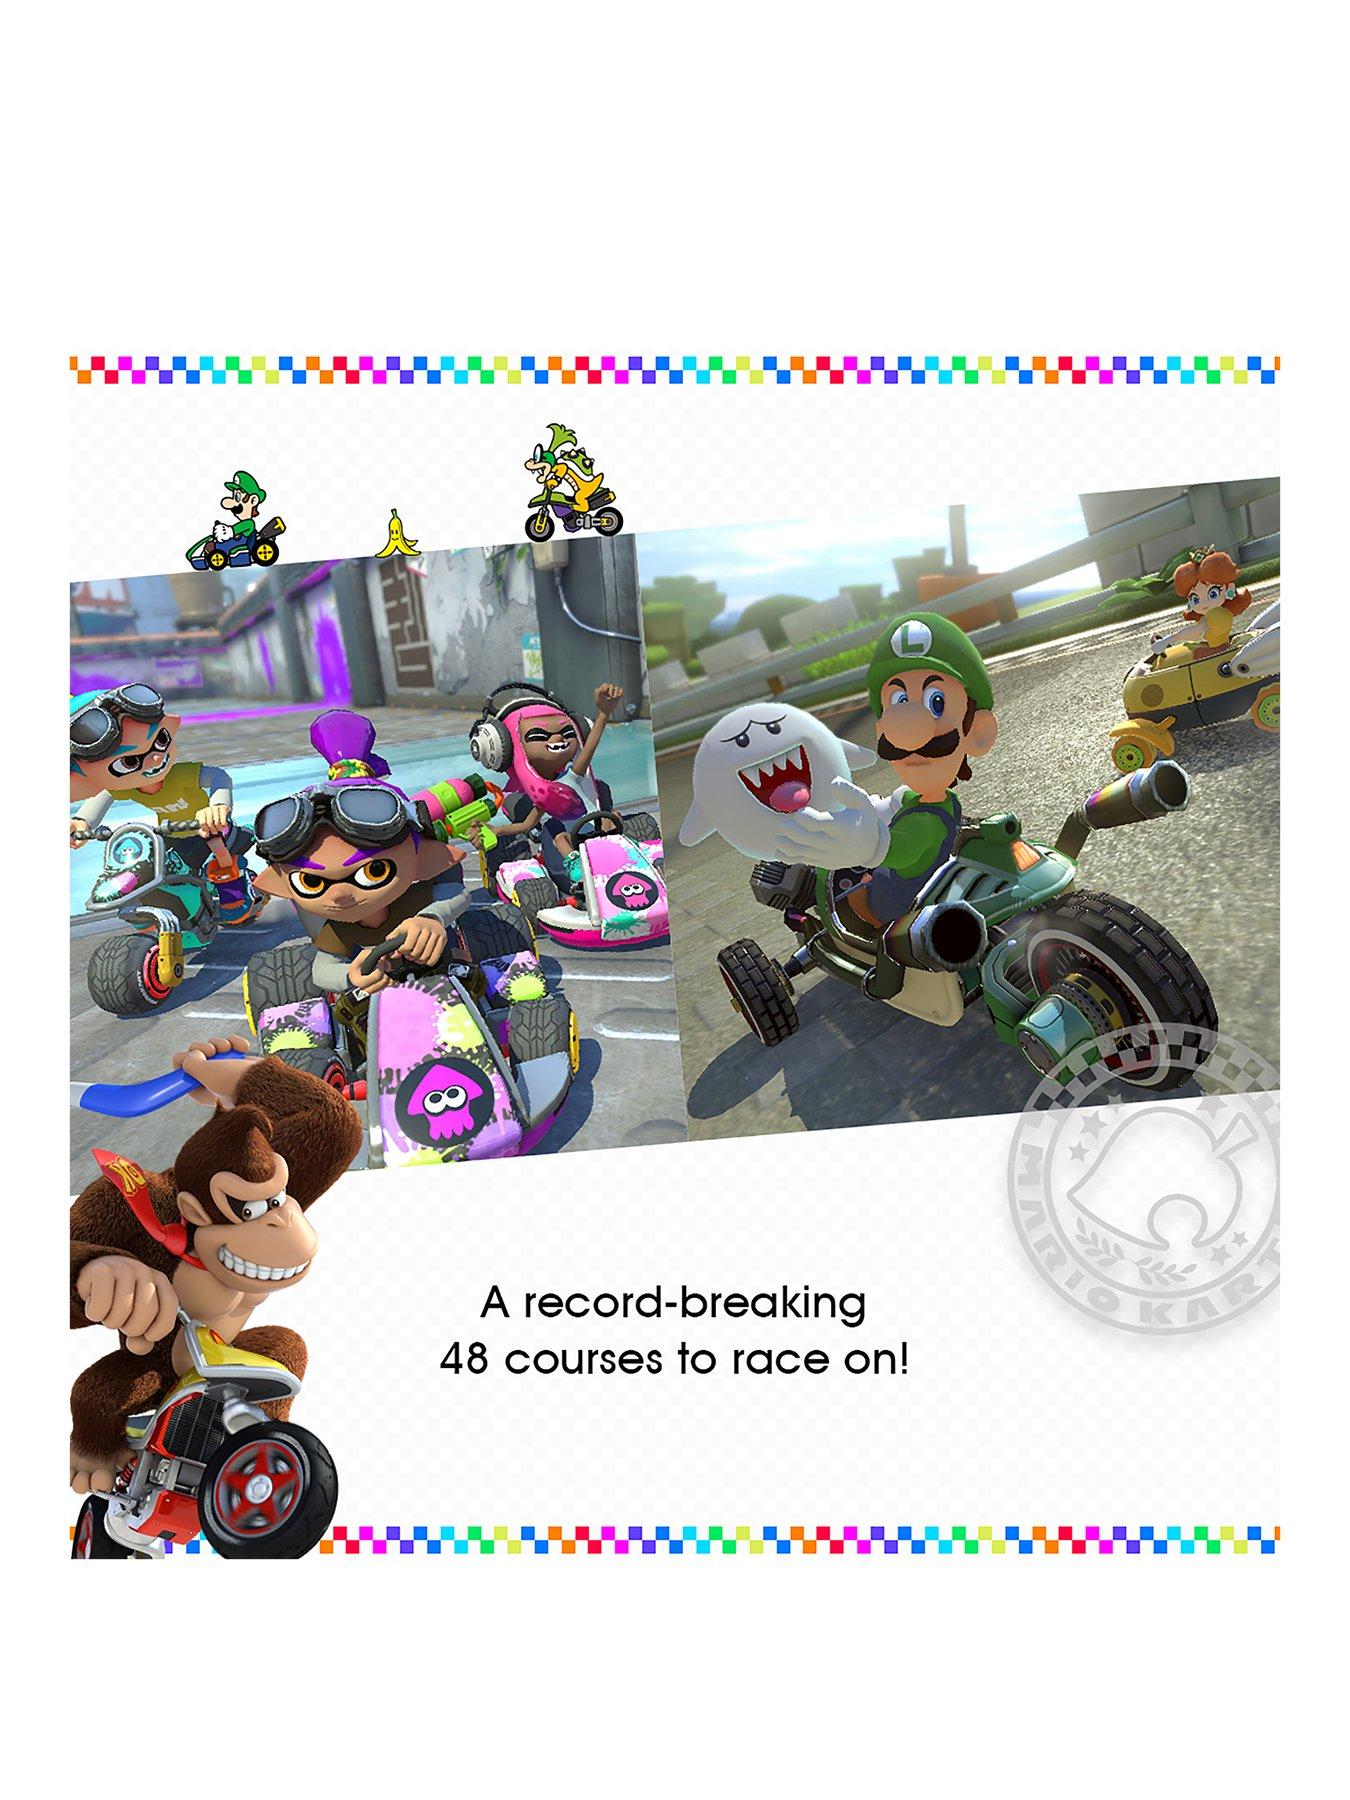 Mario Kart 8 Deluxe Nintendo Switch [Digital] Digital Item - Best Buy